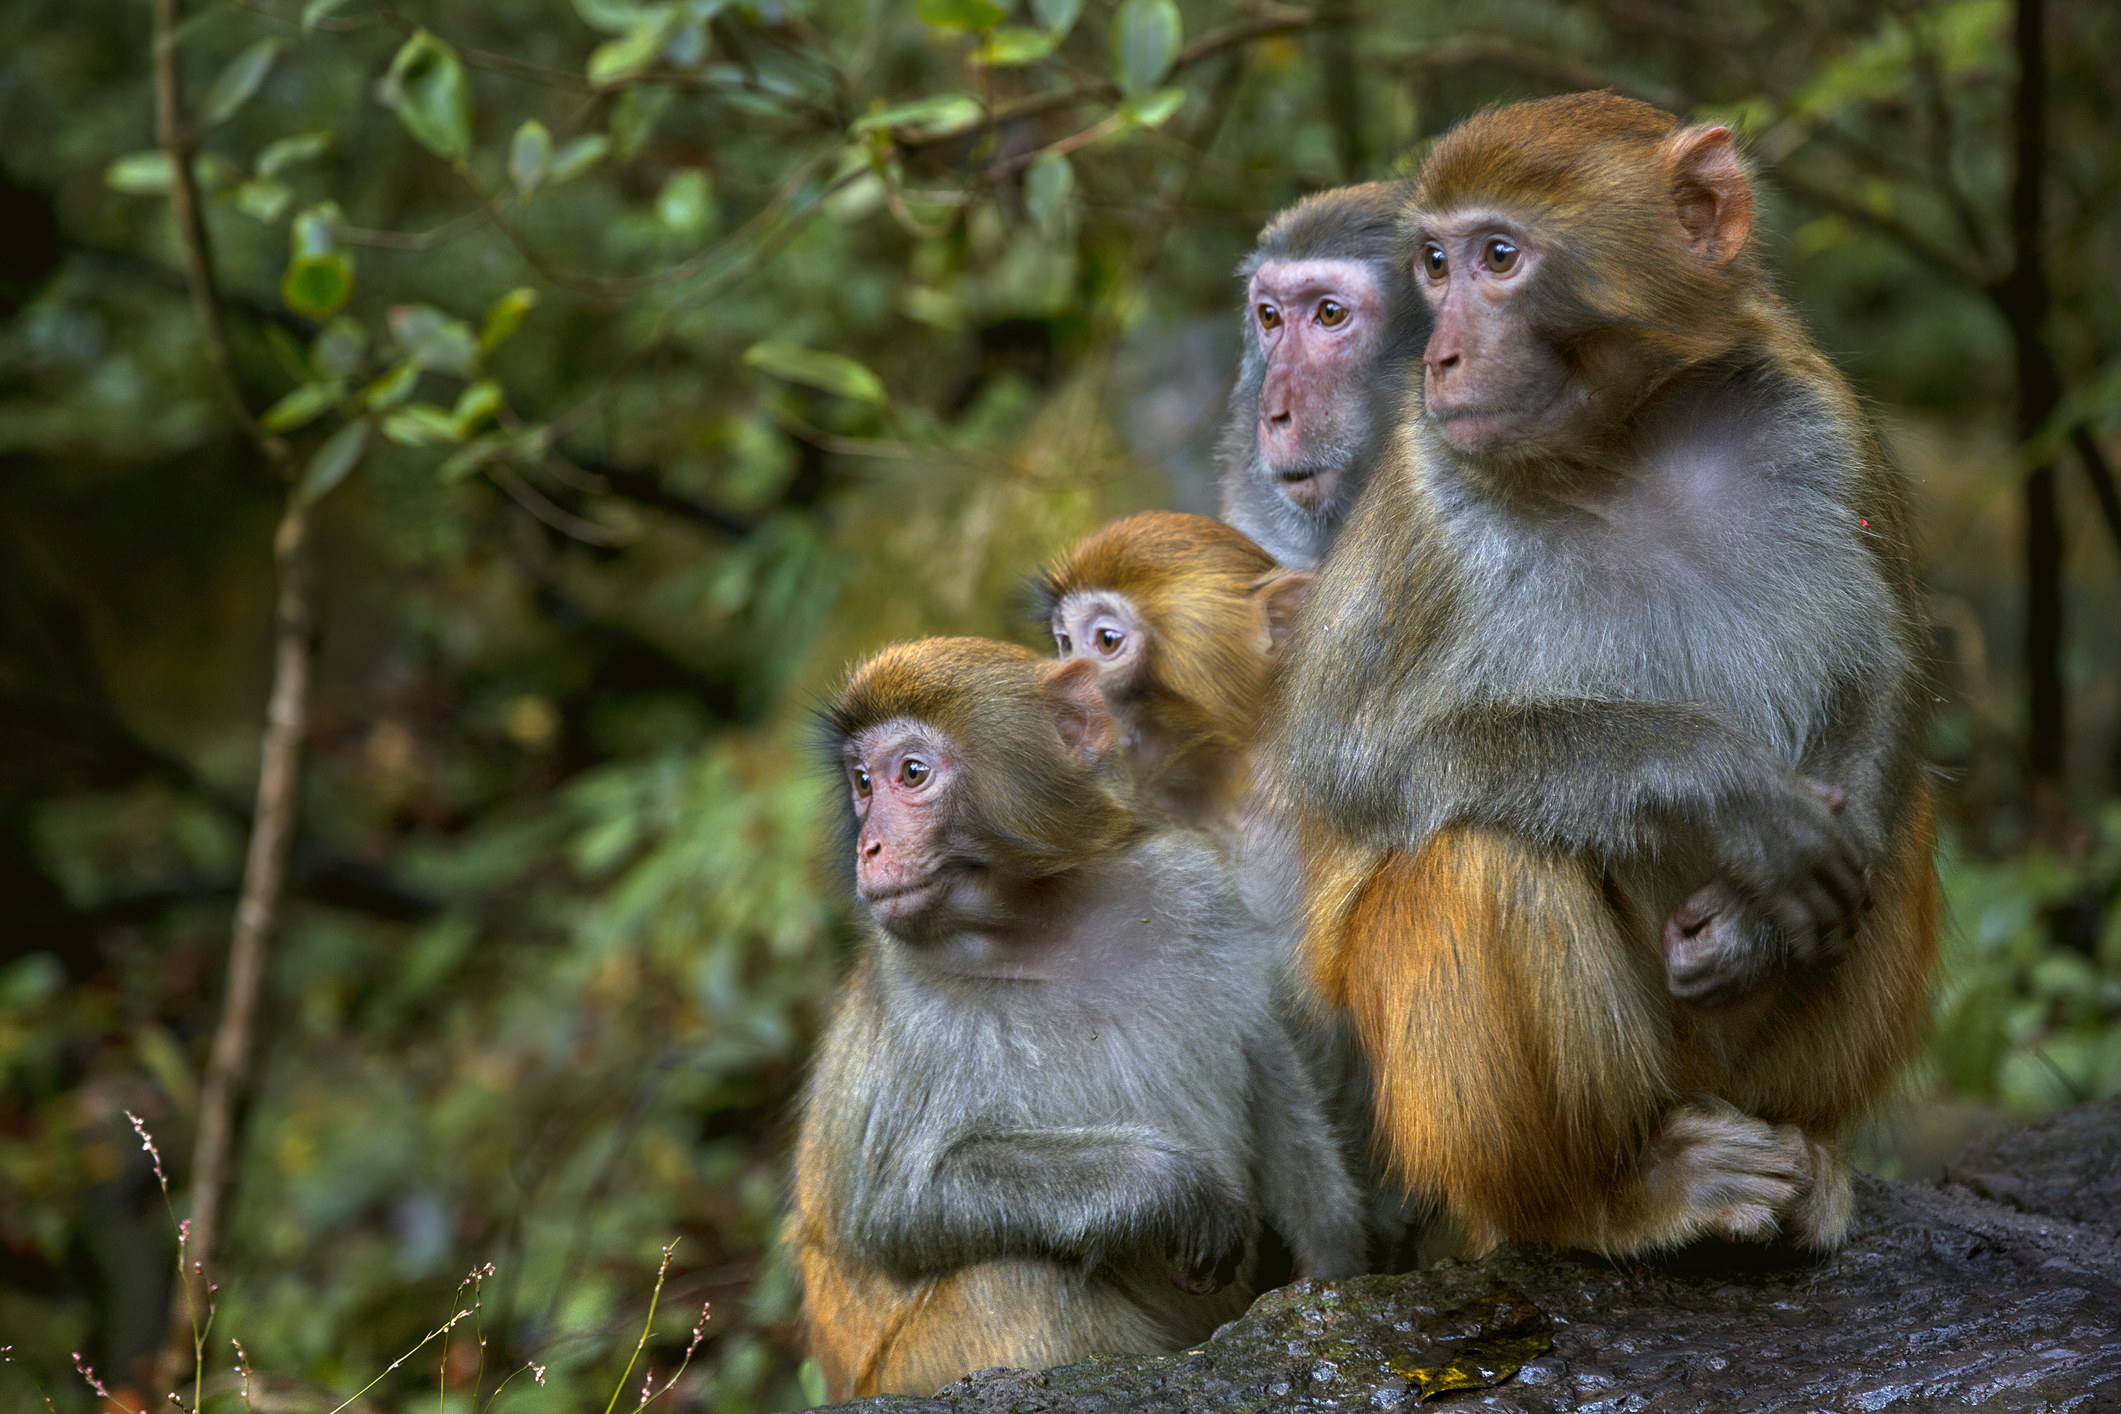 A group of Rhesus monkeys in the woods